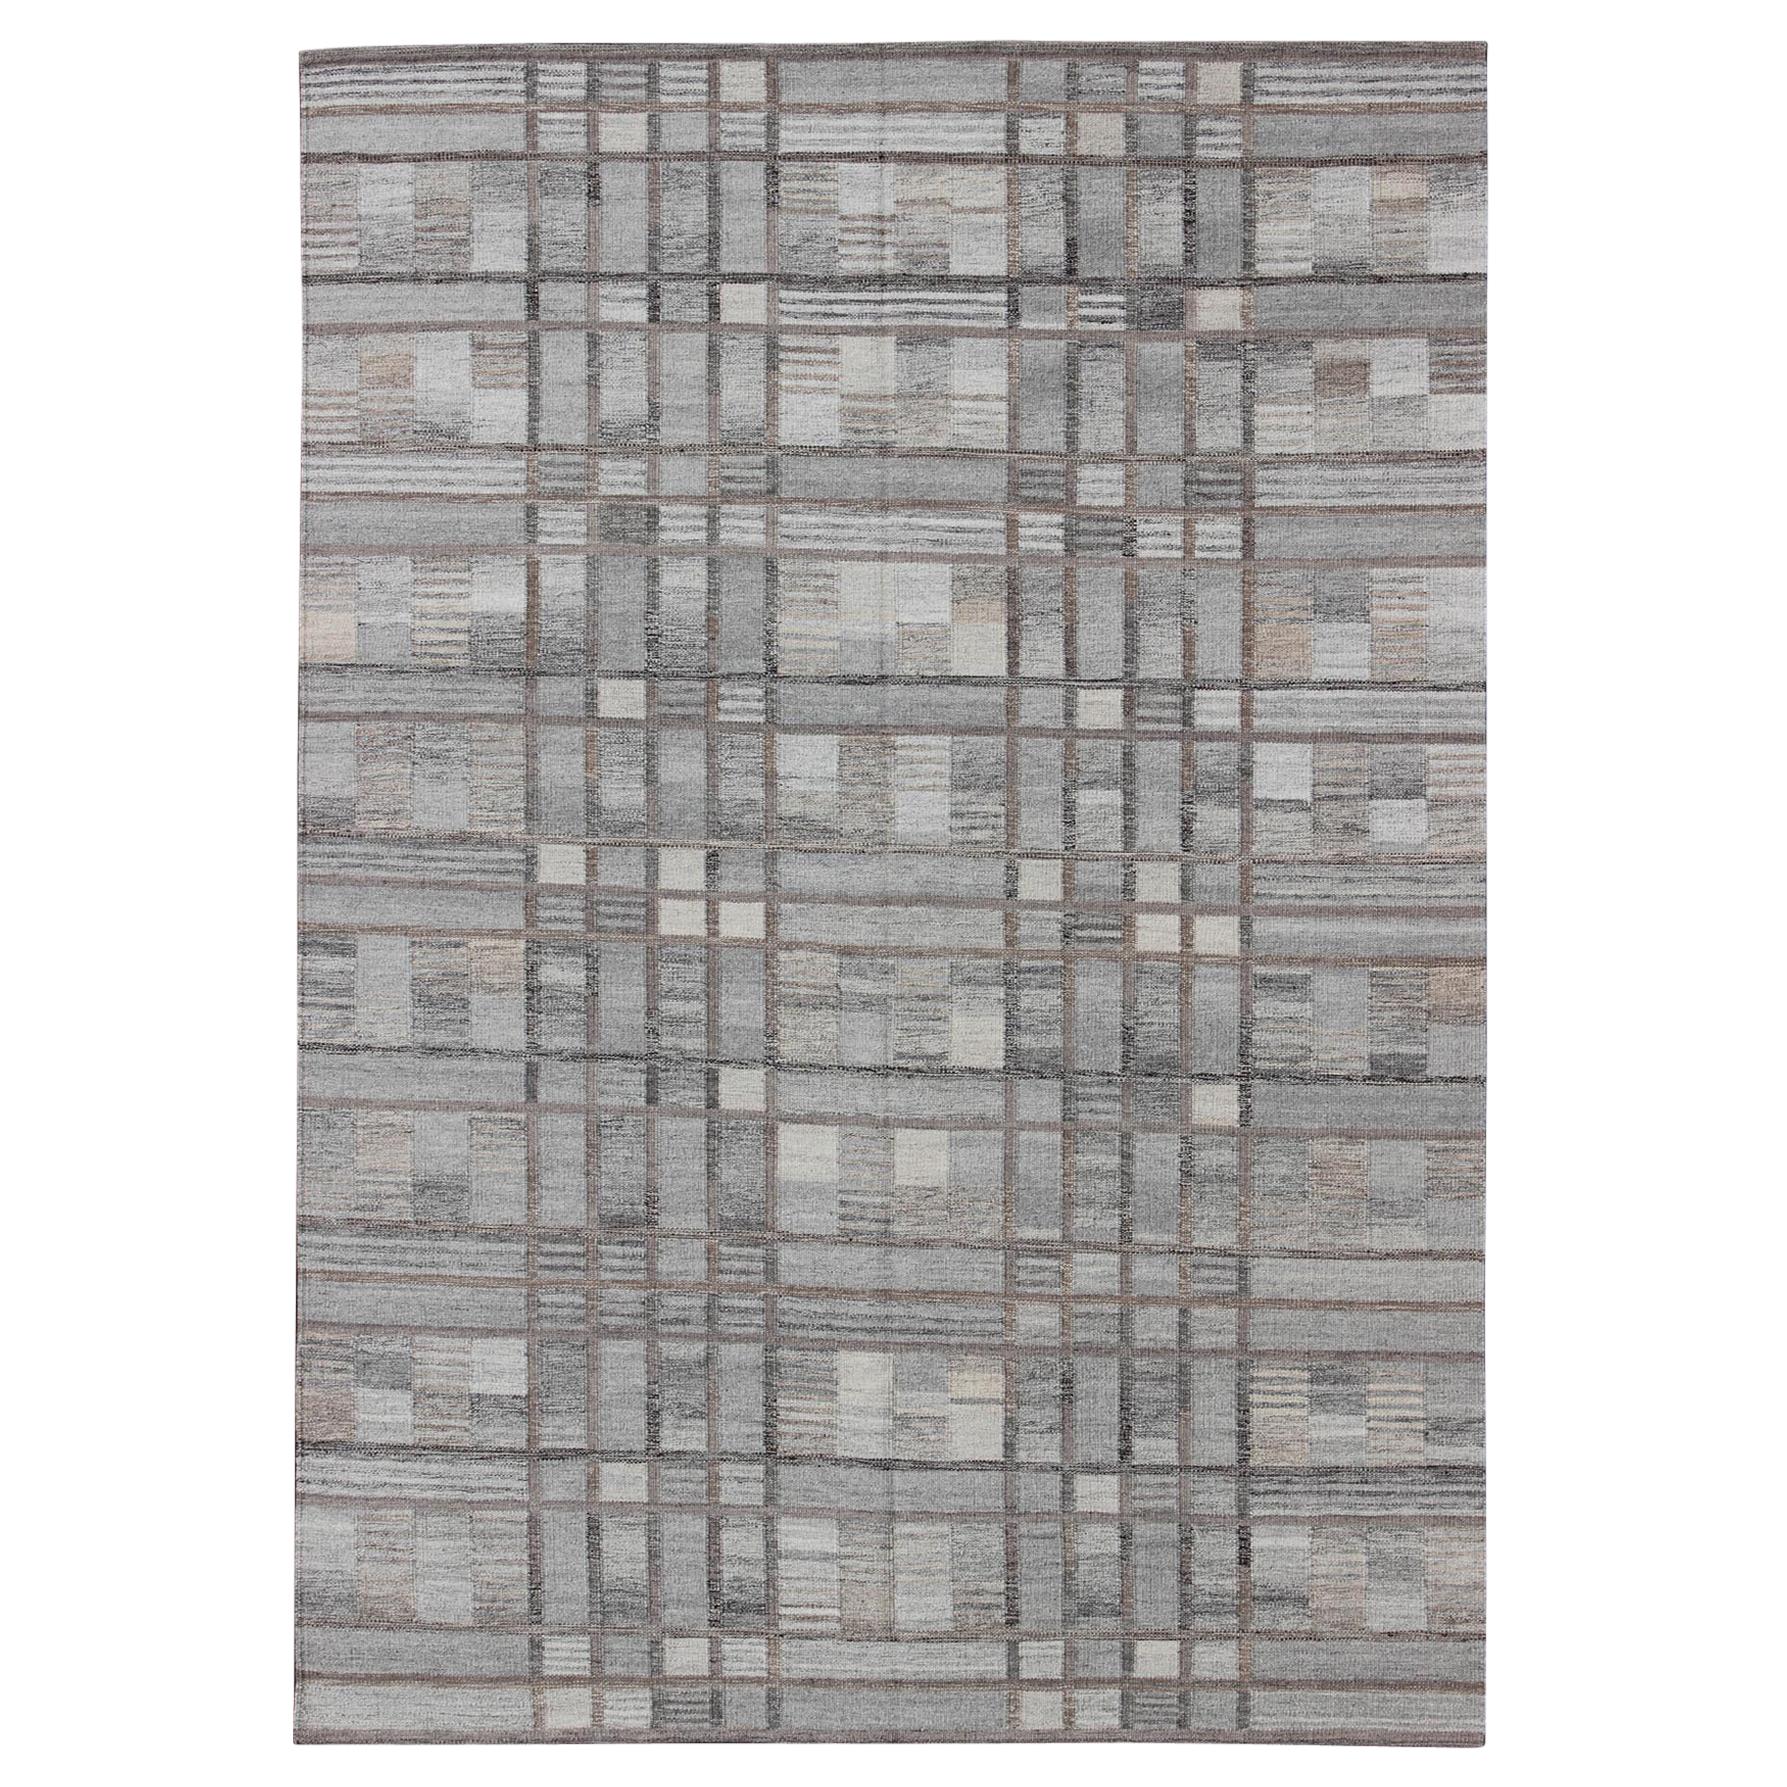 Geometric Stripe Block Modern Scandinavian Flat-Weave Design Rug in Gray Tones